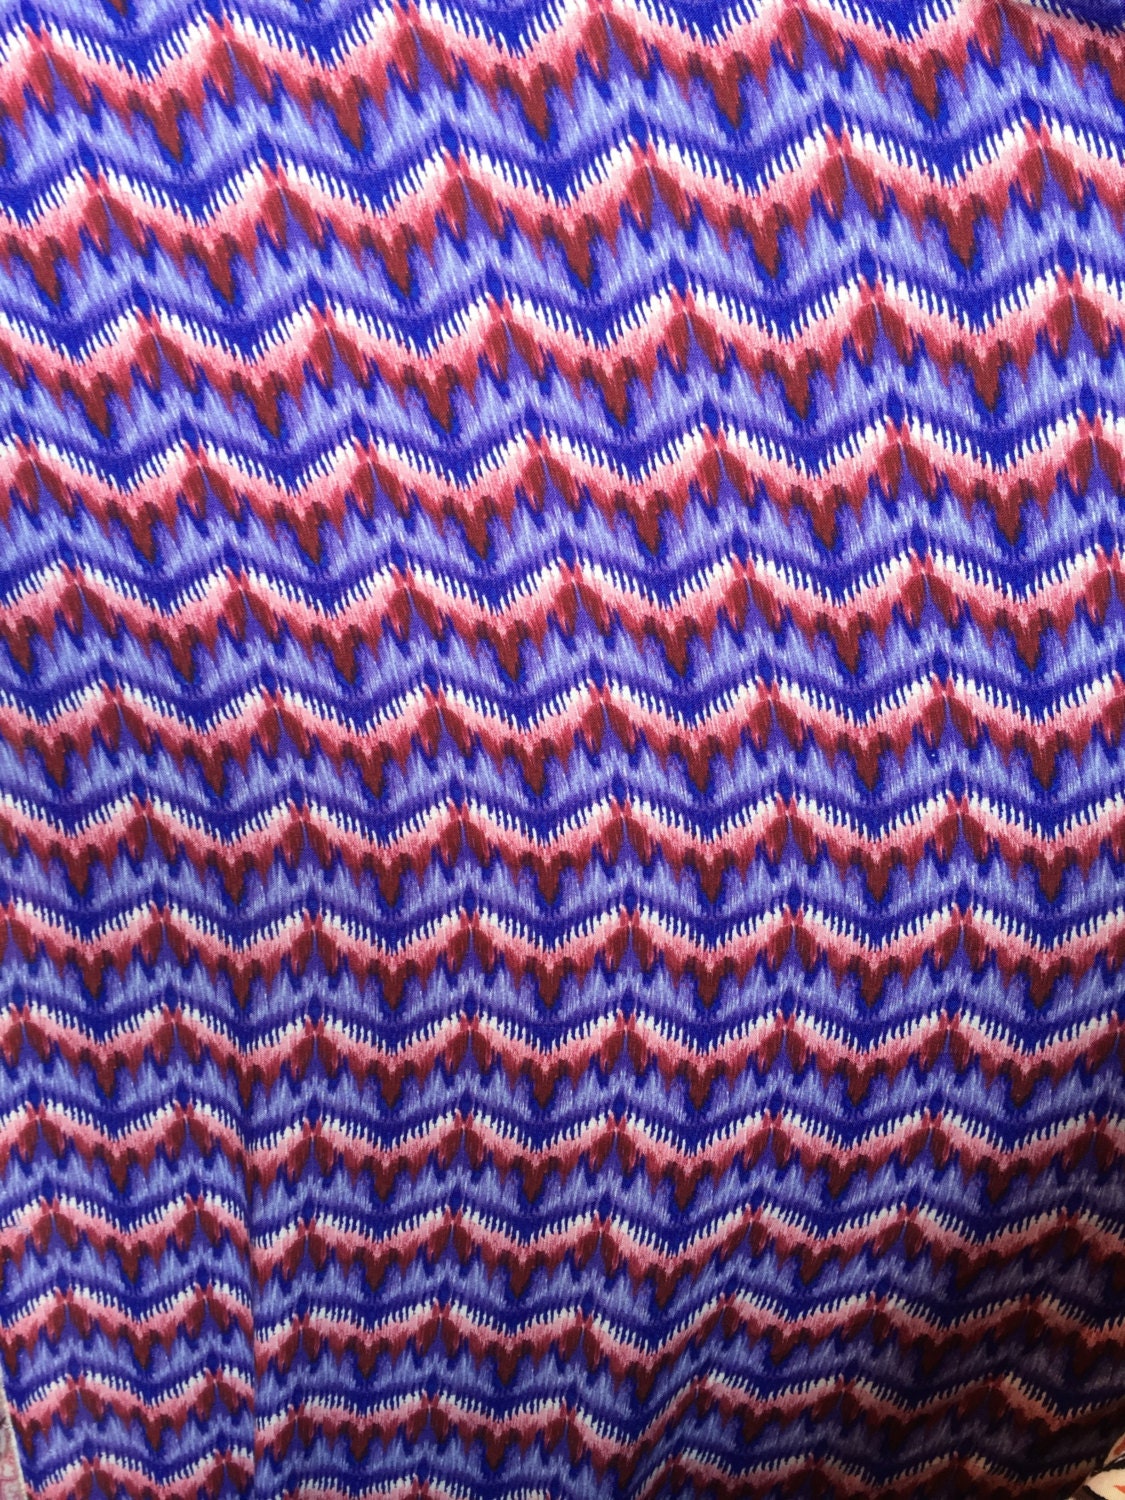 100% Rayon challis. Ikat w purple, maroon n blue fabric sold by the yard soft flowy fabric organic